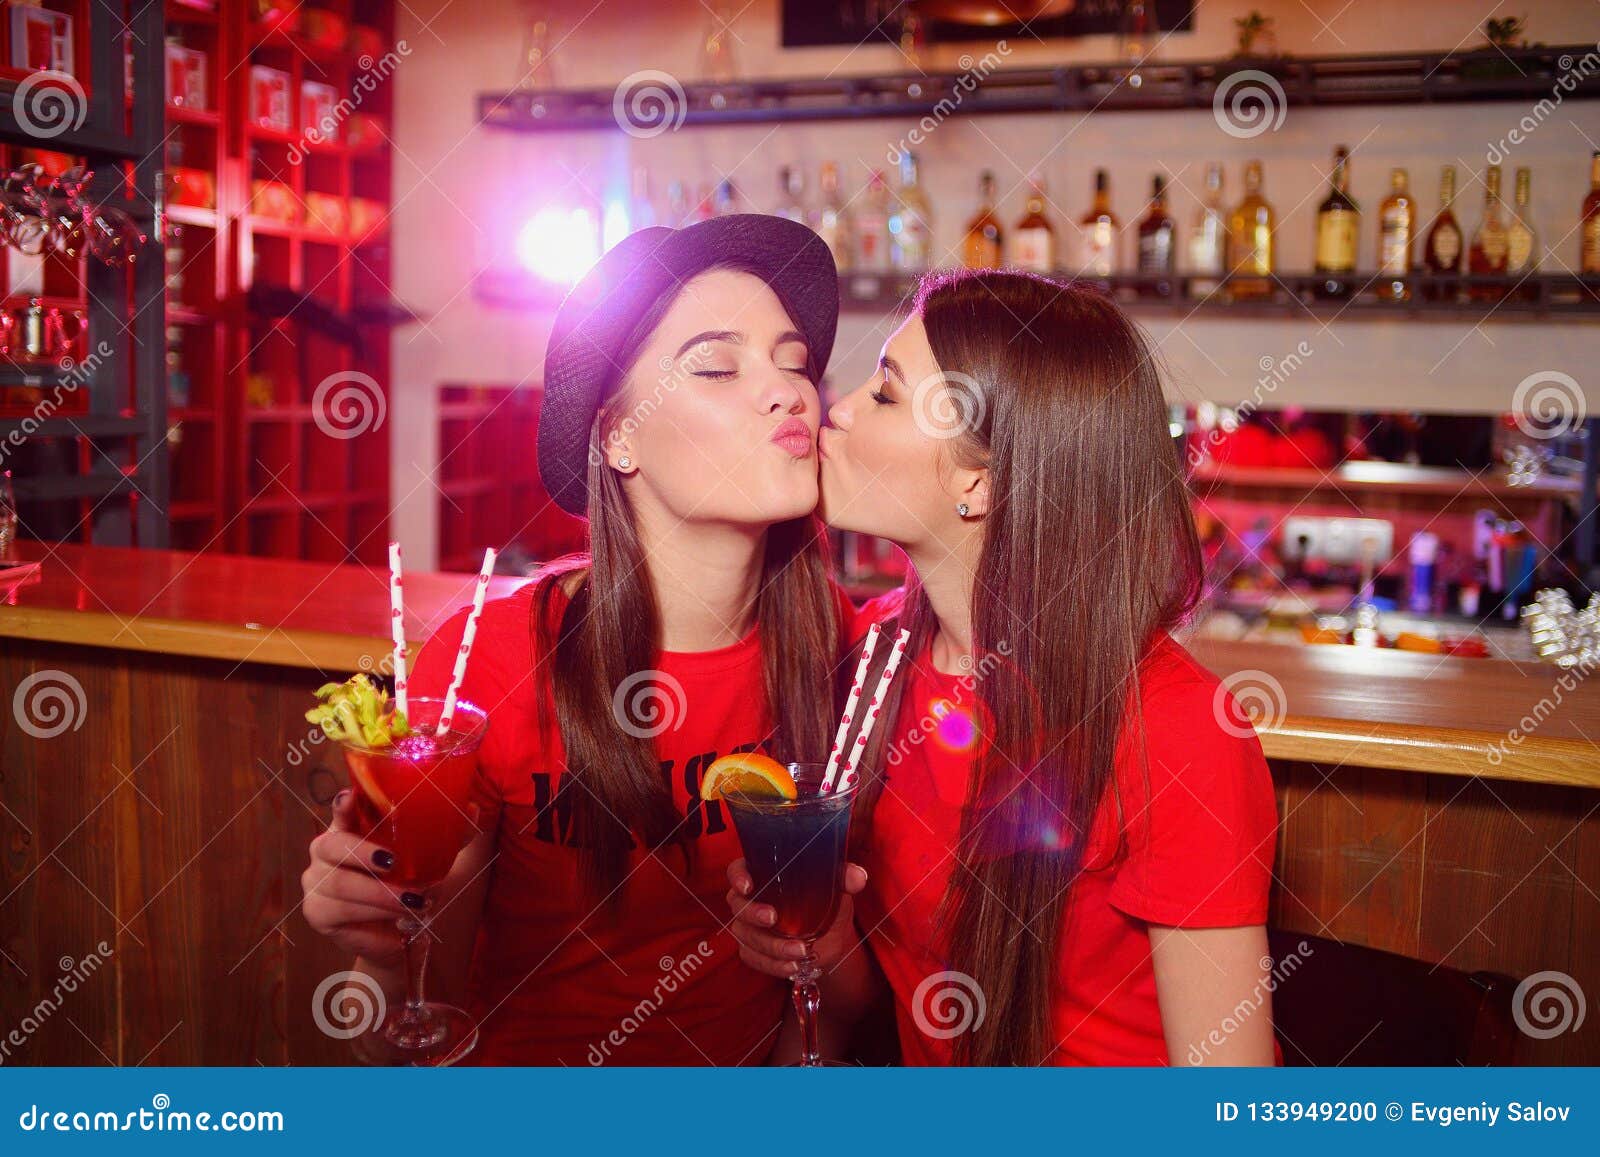 party club lesbian kiss video gallerie photo